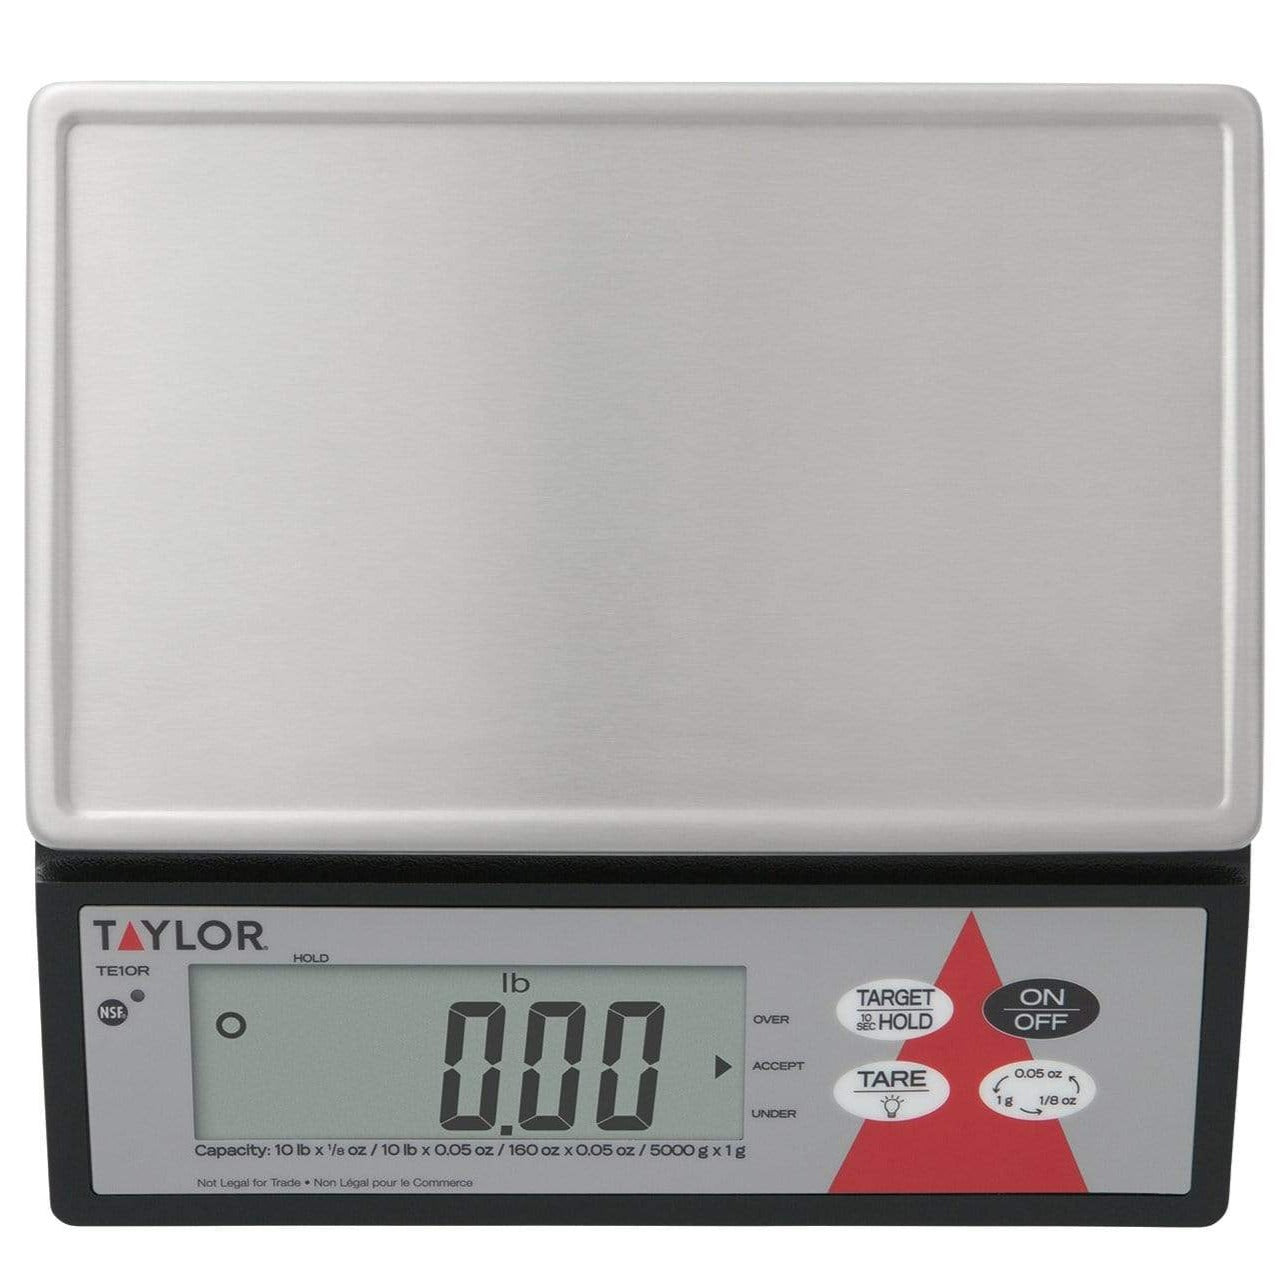 Digital Portion Control Kitchen Scale, TE10R